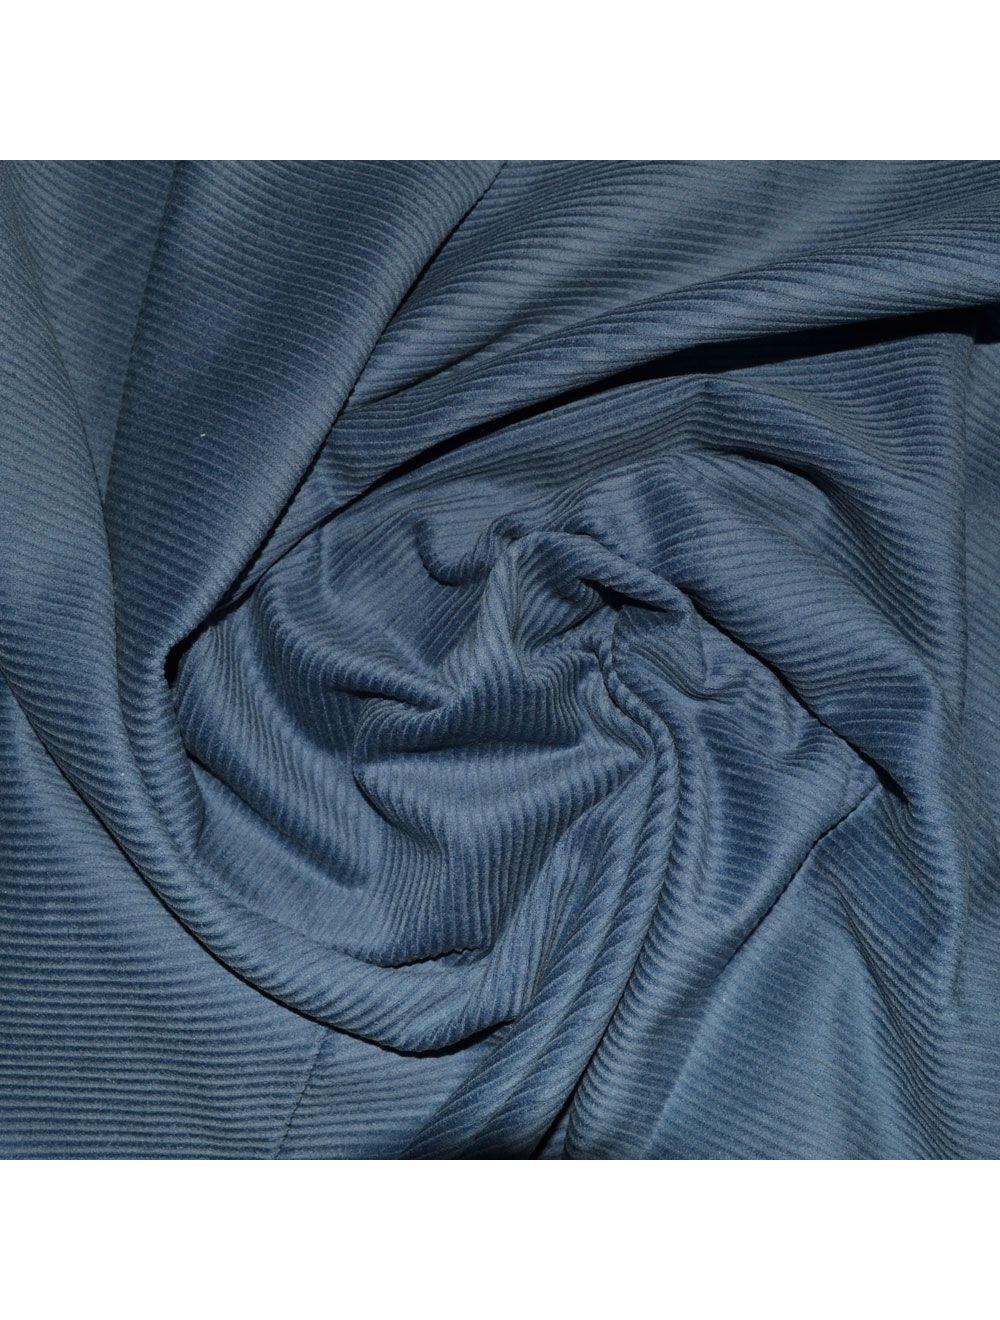 Chambray Heavy Corduroy Fabric | UK Fabric Supplier | Calico Laine